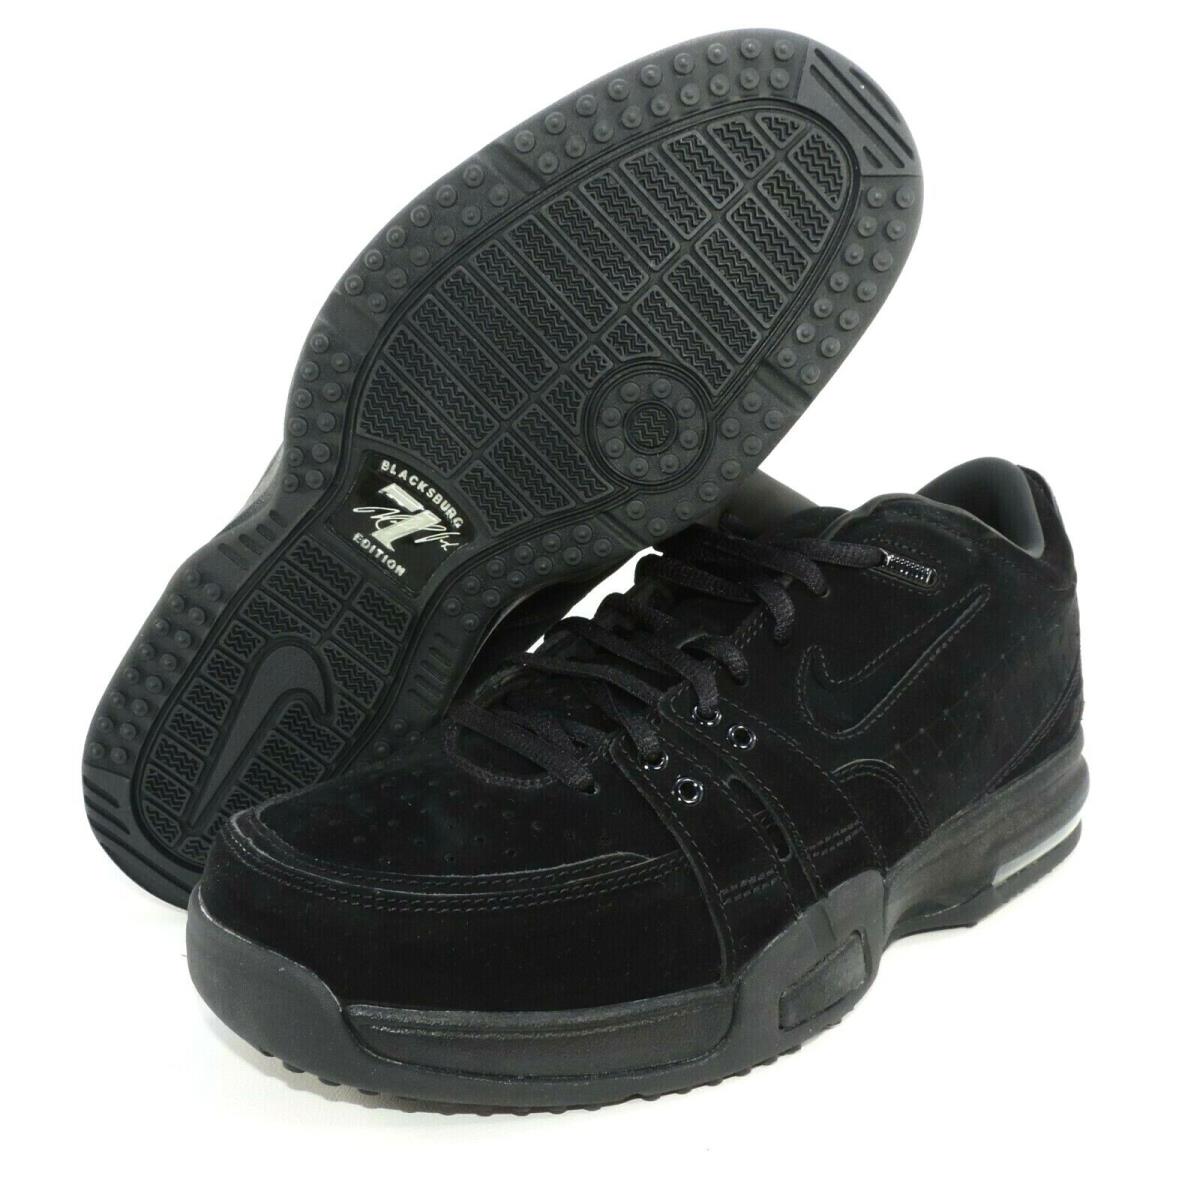 Nike shoes Mike Vick Air Blacksburg - Black 8